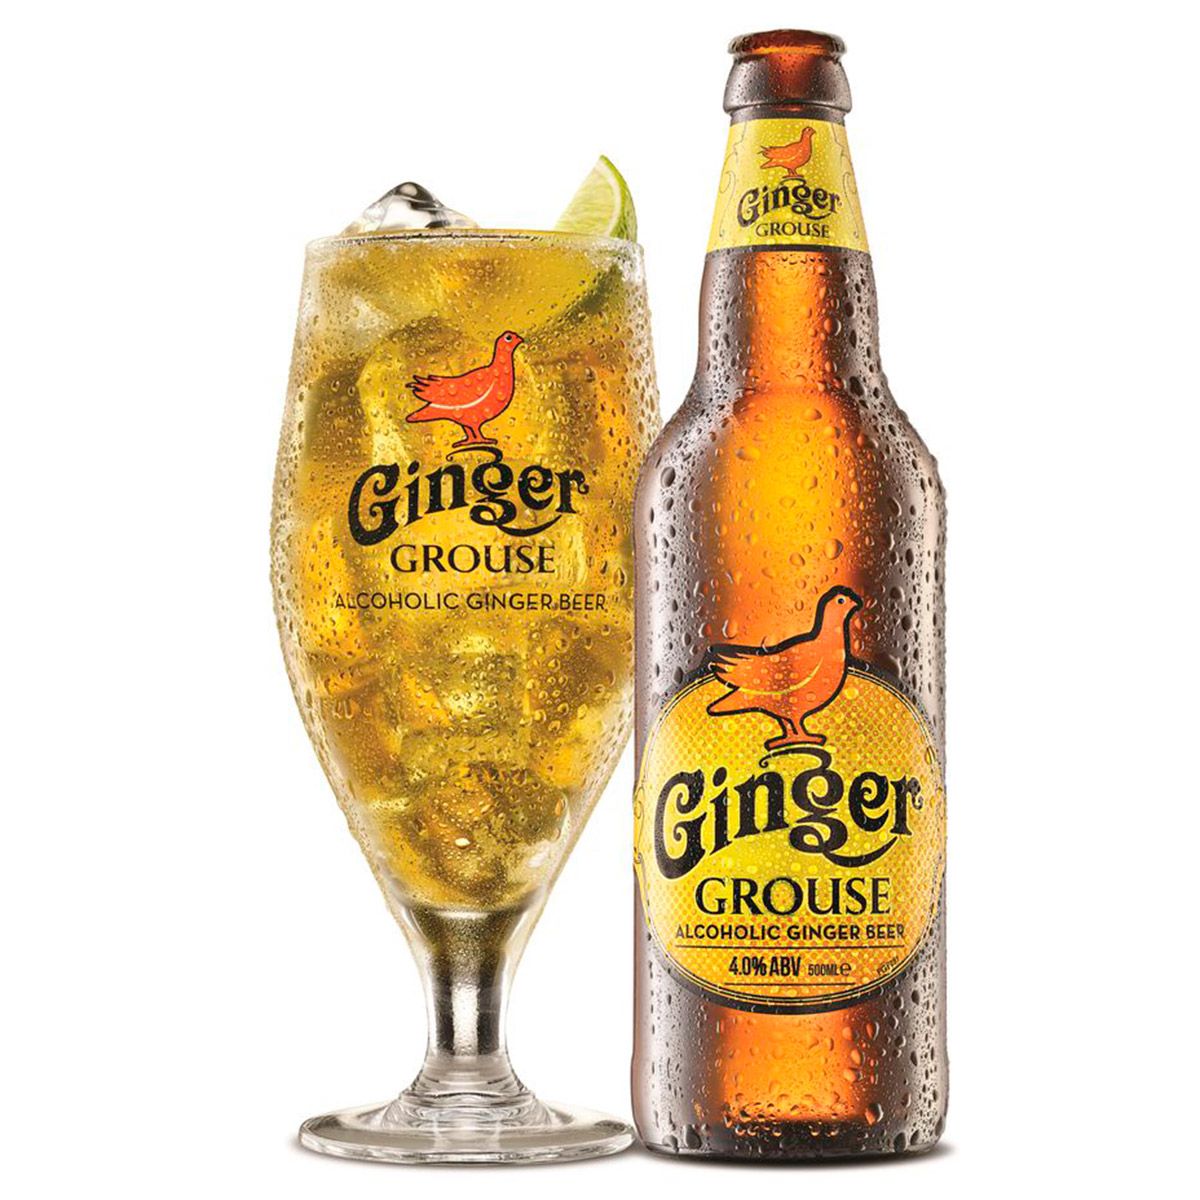 Why lashings of ginger beer is back on the menu